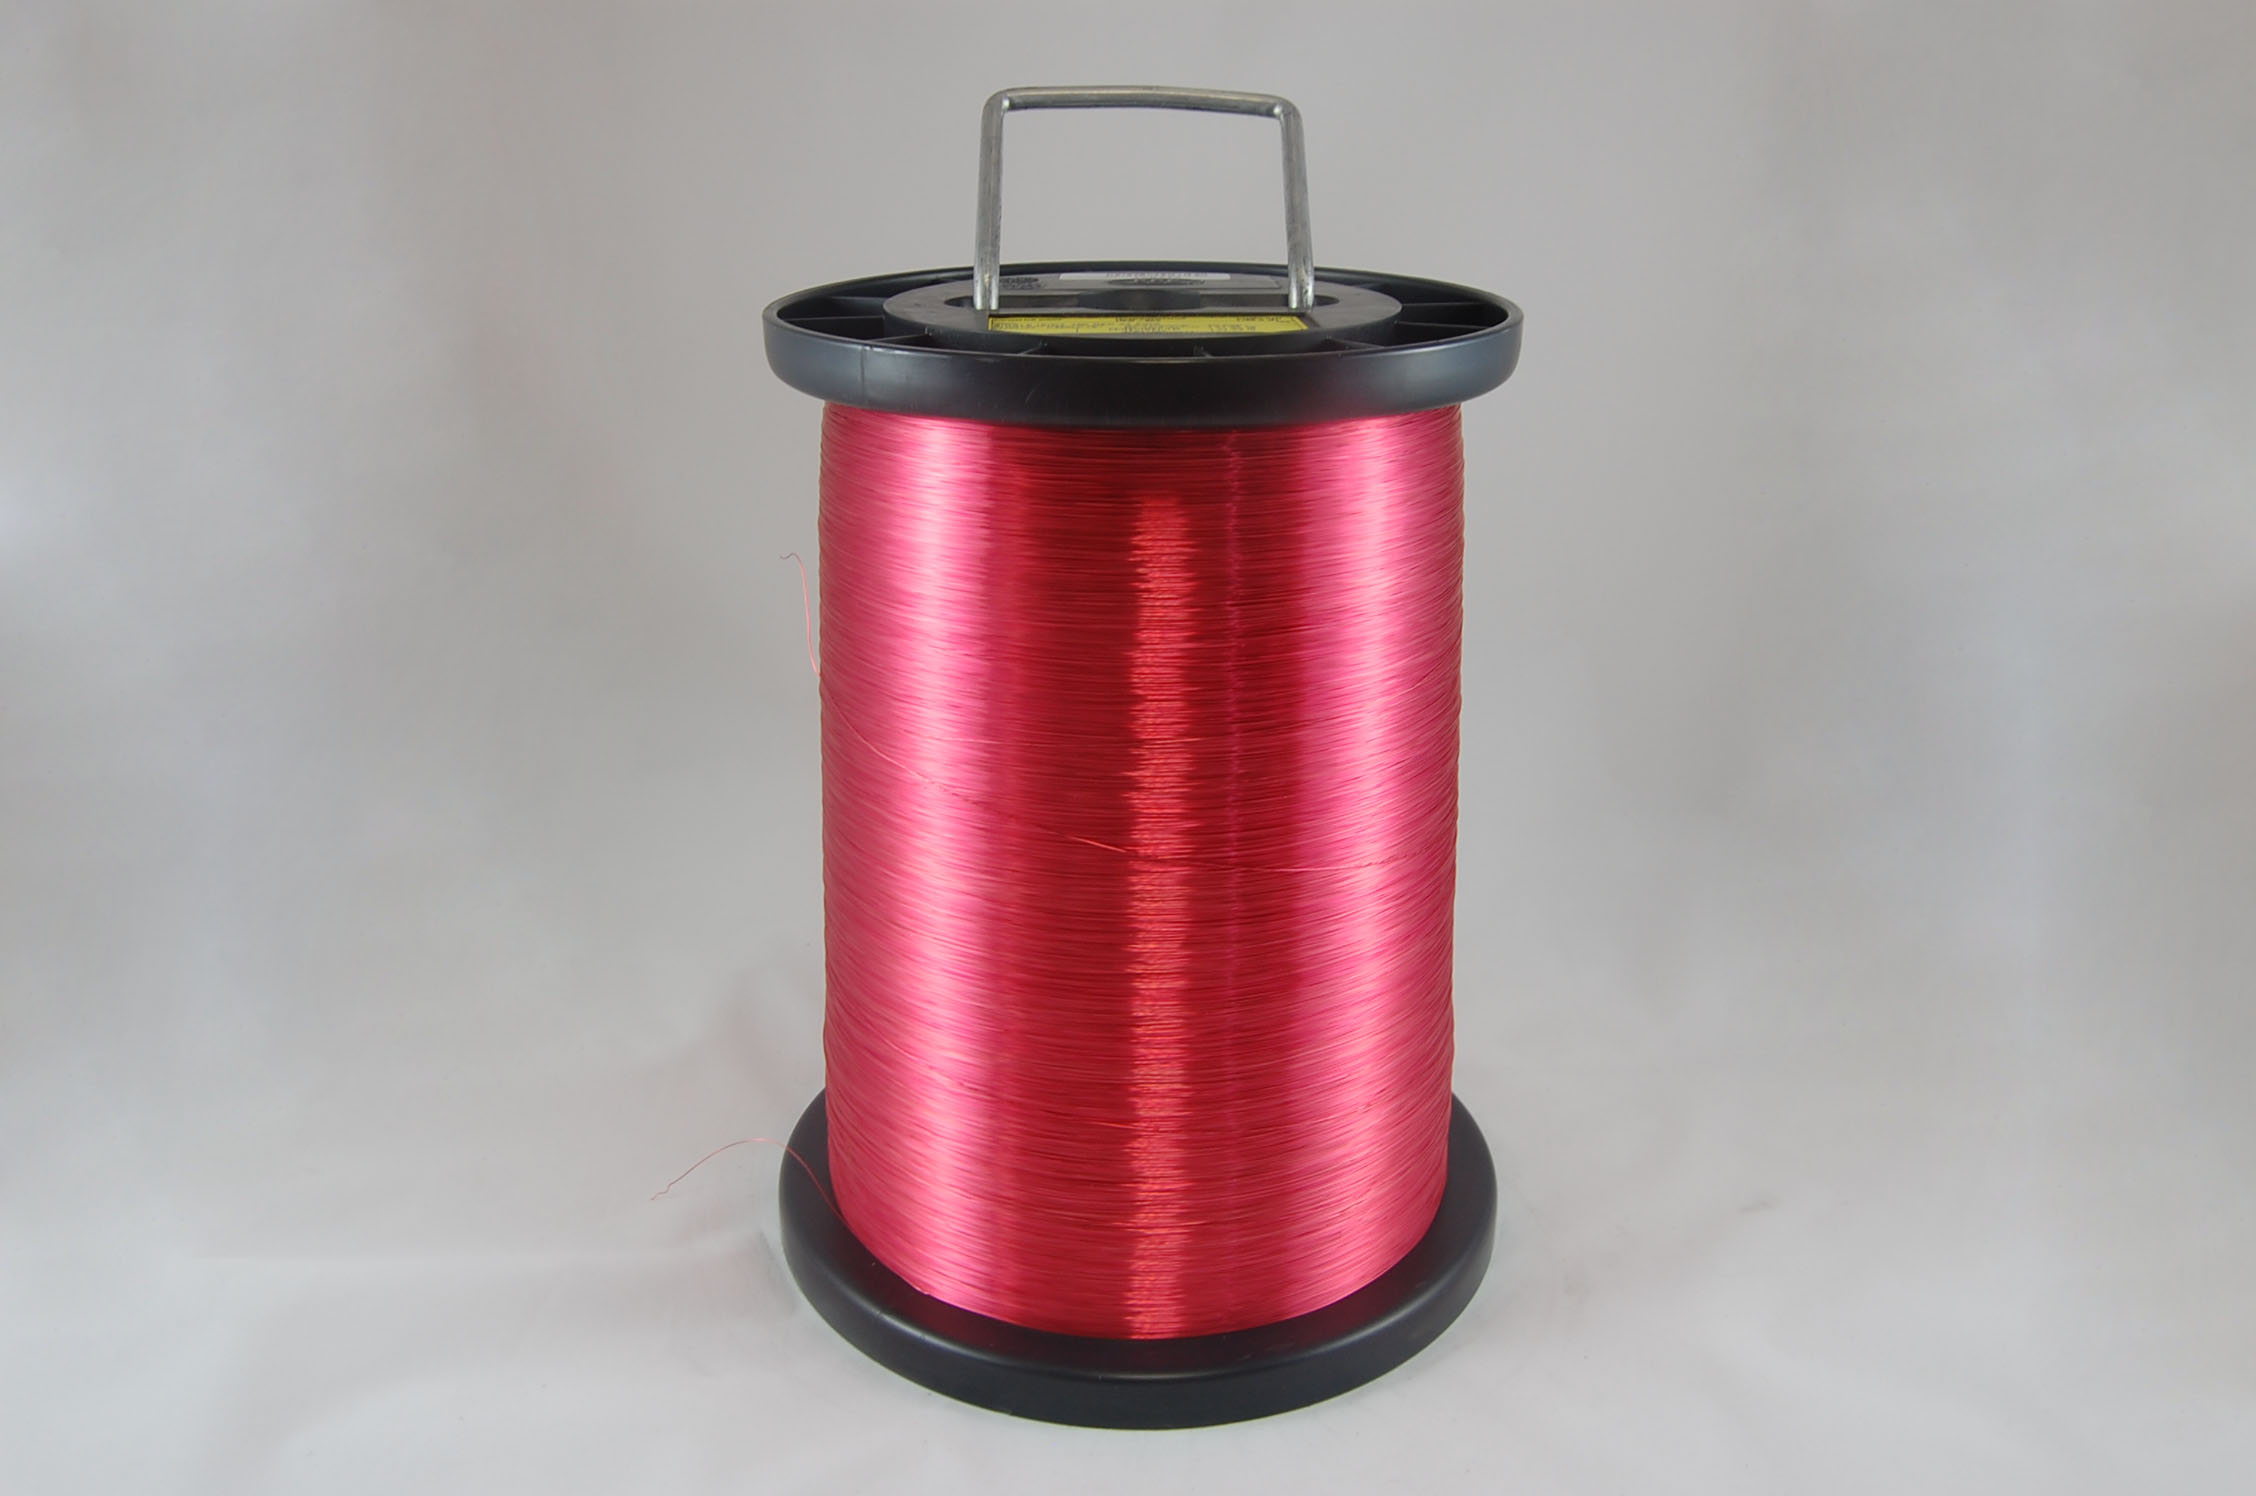 #25 Heavy INVEMID 200 Round MW 35 Copper Magnet Wire 200°C, copper, 45 LB half pack pail (average wght.)